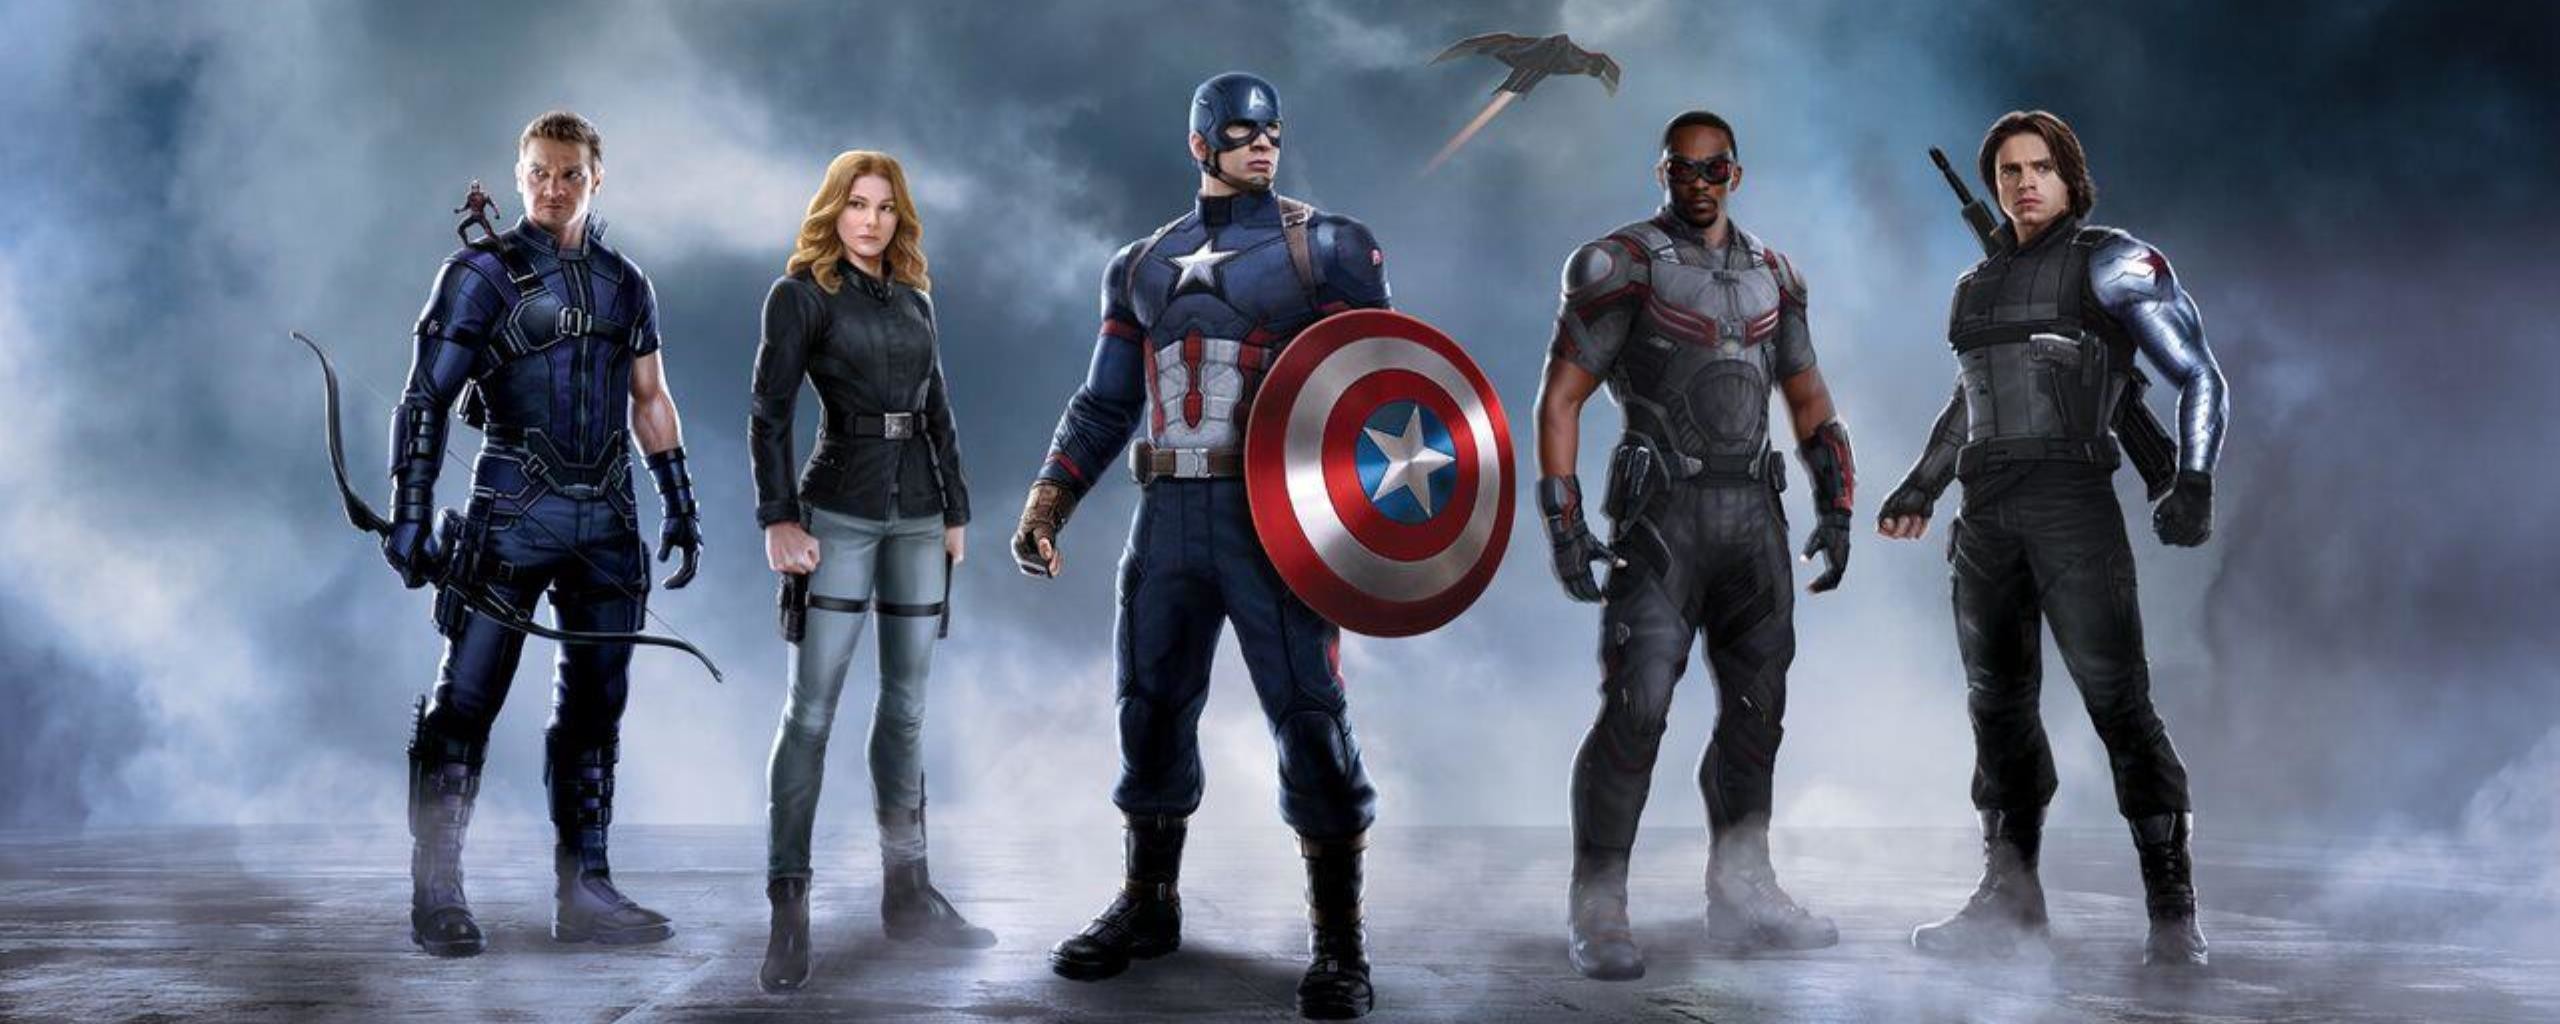 Captain America Civil War Movie Image HD